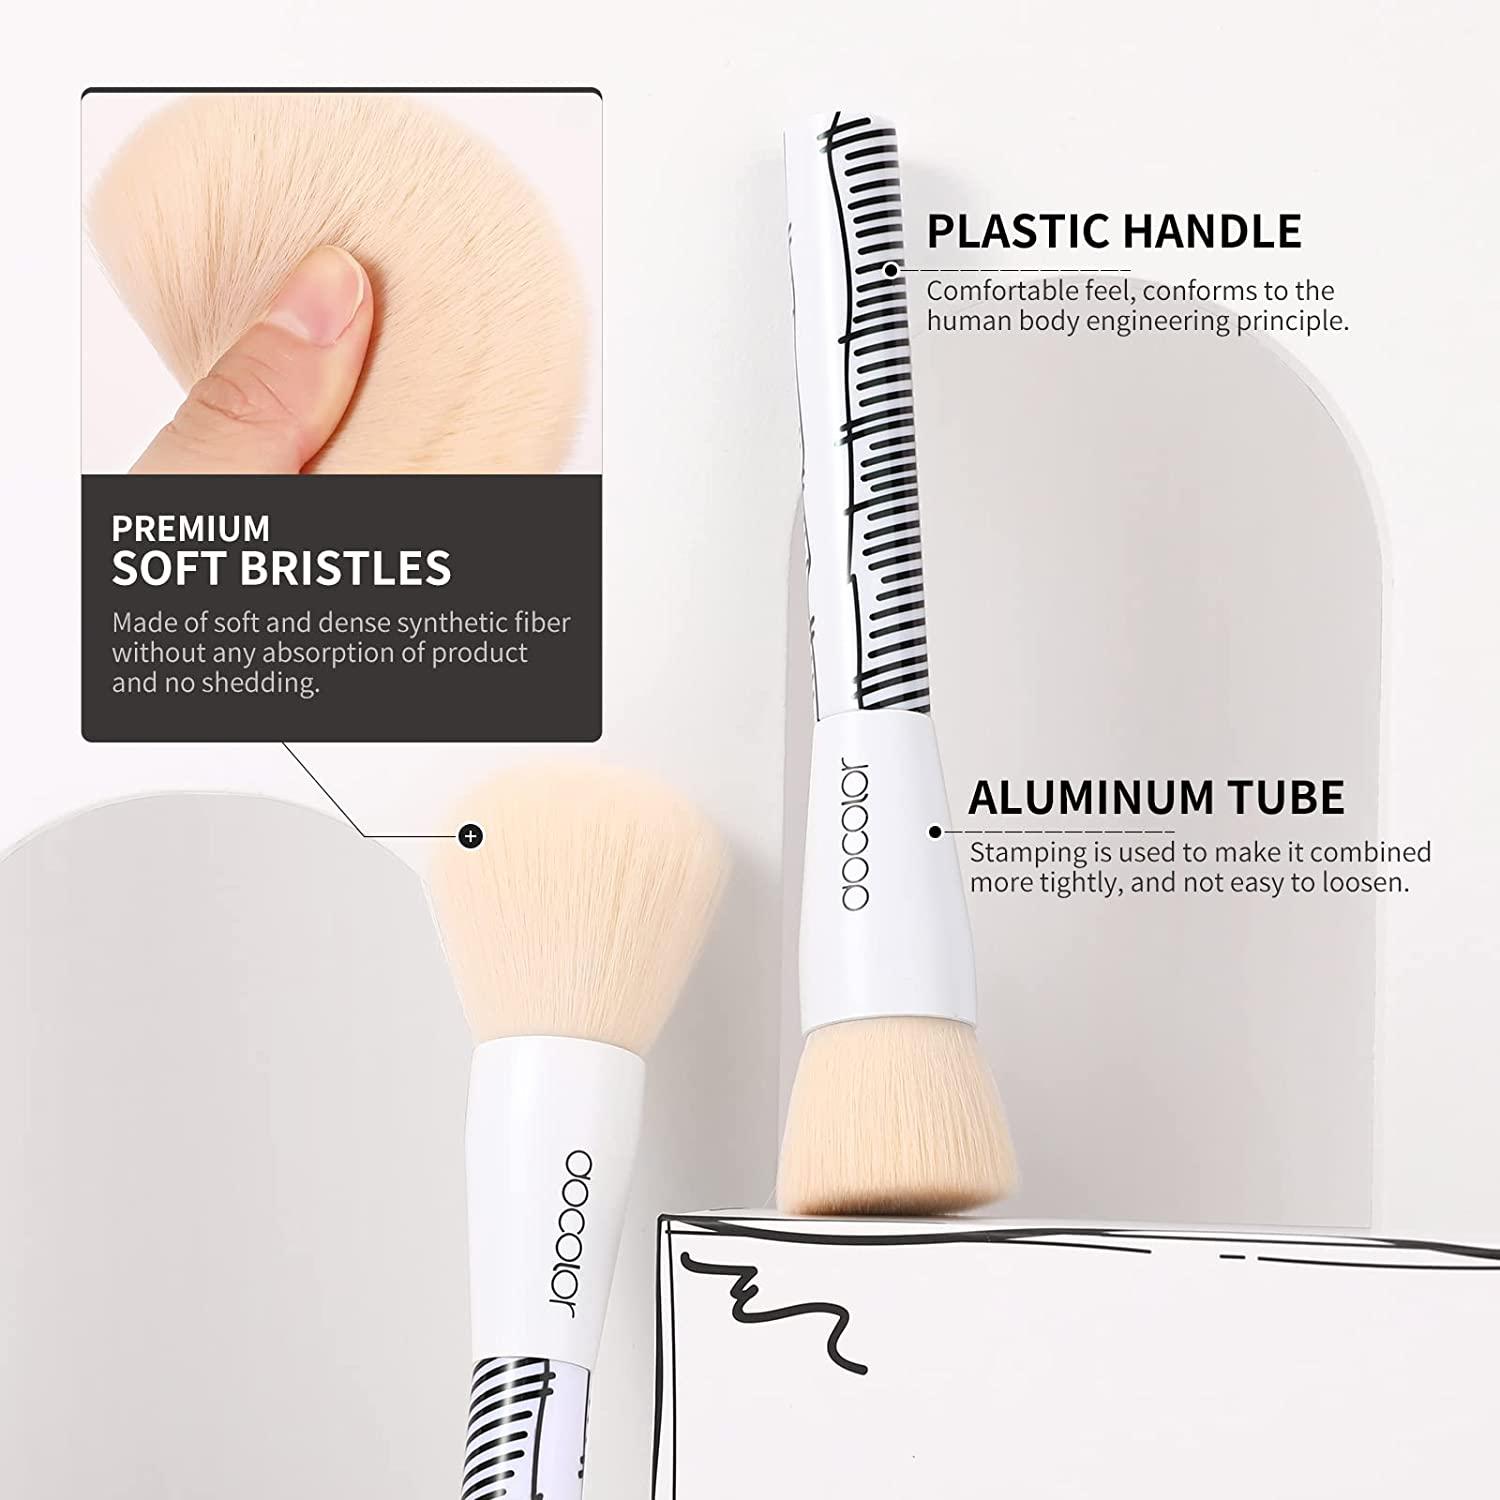 12-Piece Complete Makeup Brush Set